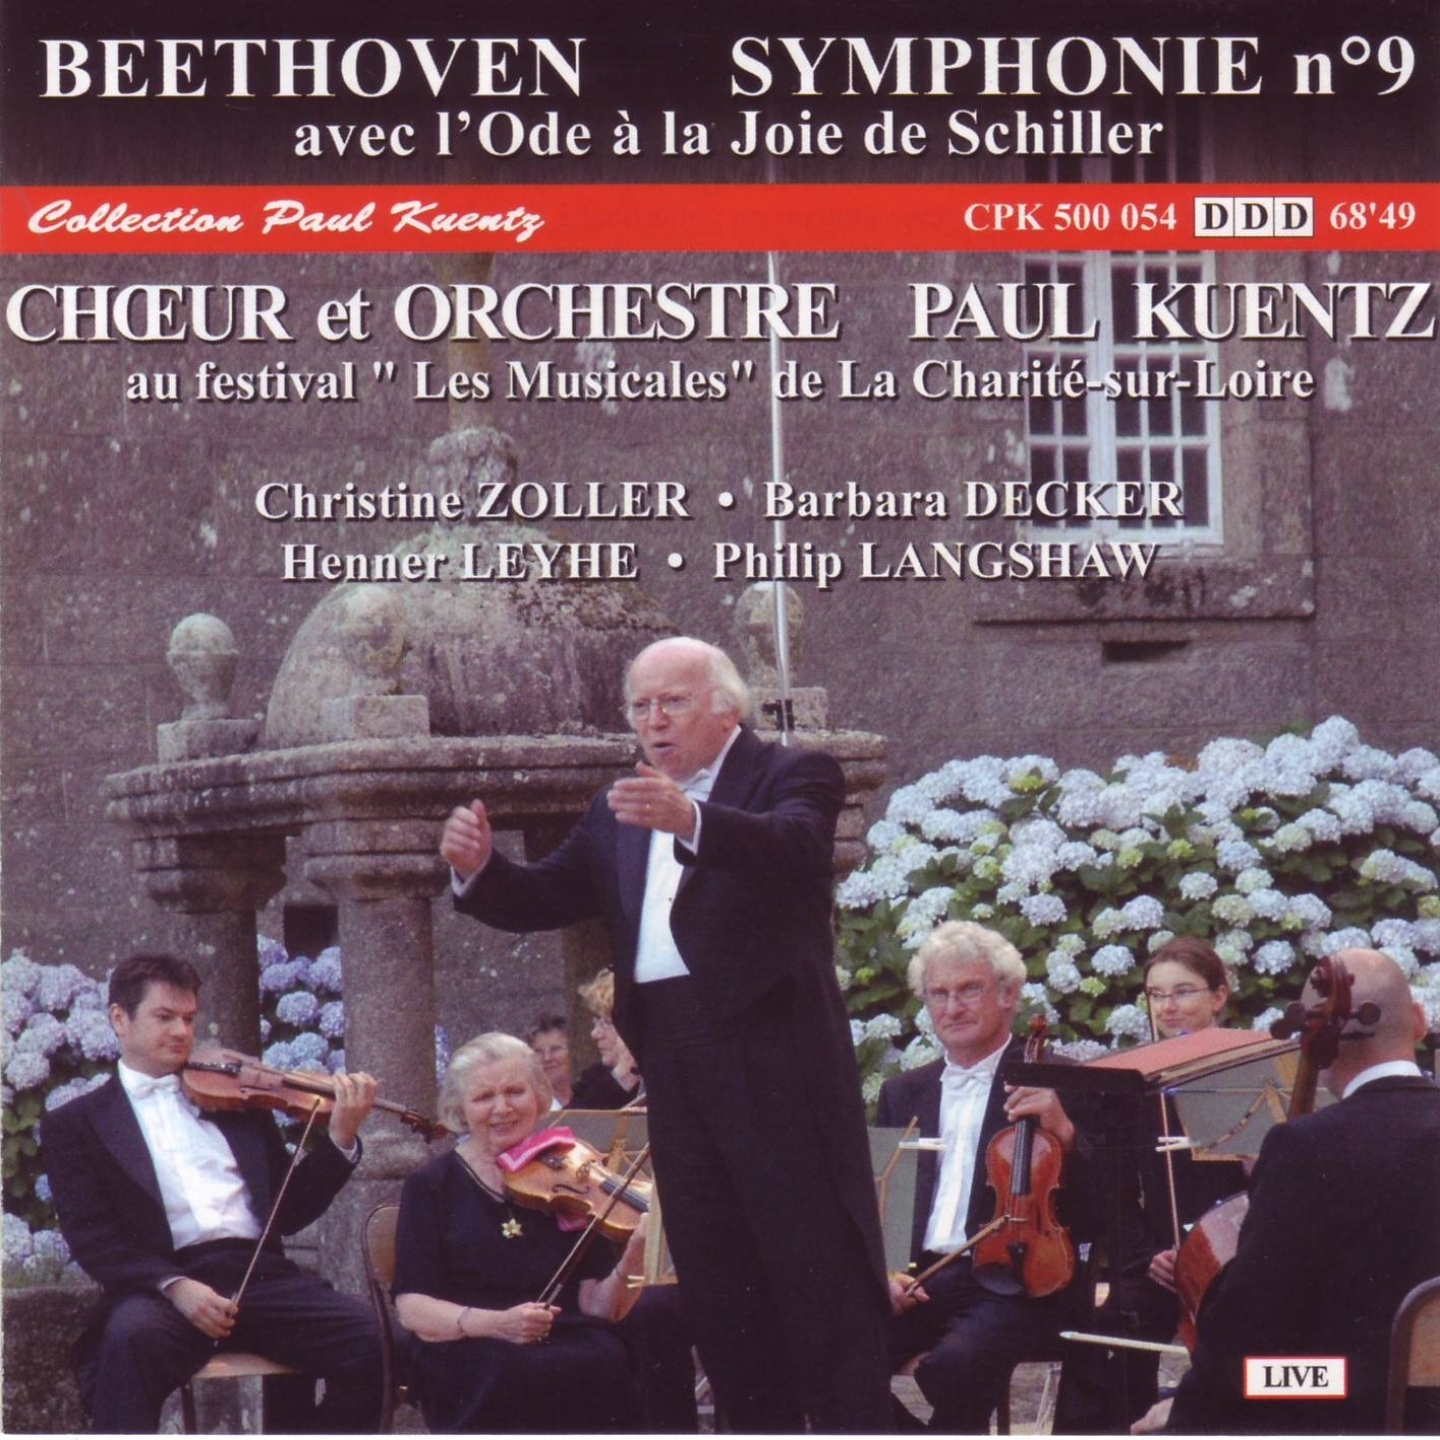 Ludwig Van Beethoven : Symphonie n9 en re mineur, Op. 125, avec l' Ode a la joie de Schiller